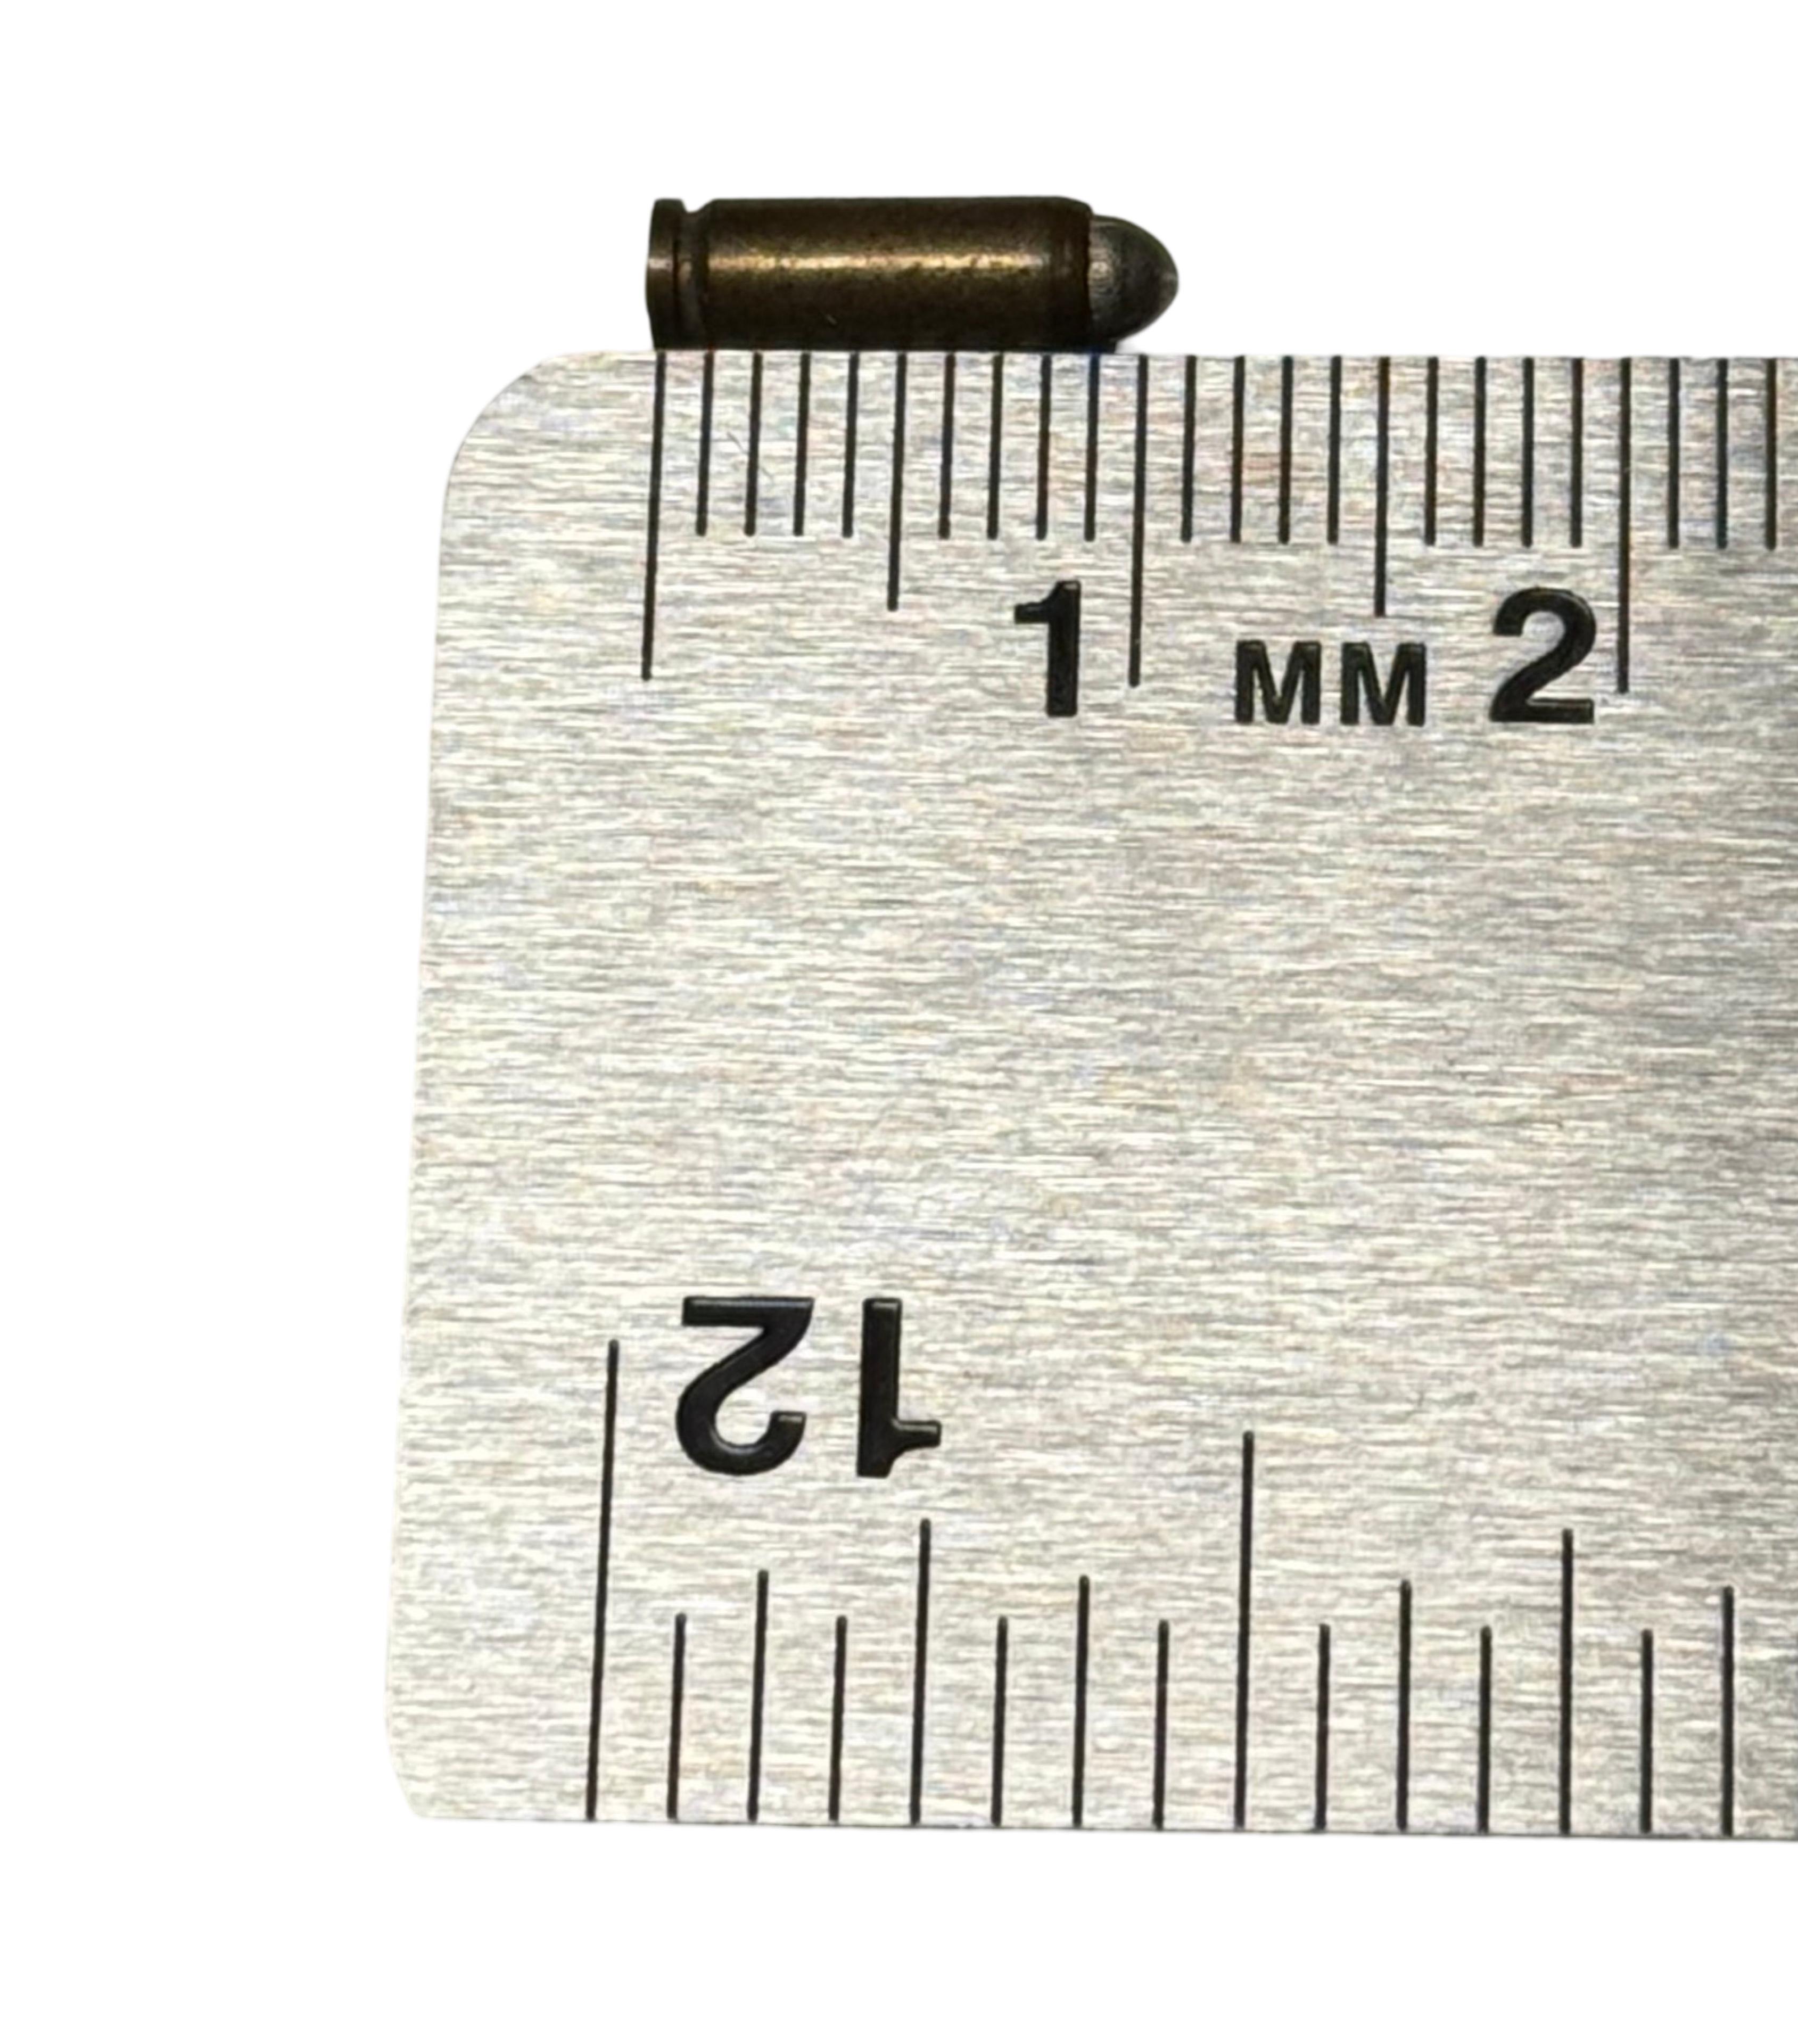 RARE 2.7mm Kolibri Auto Cartridge